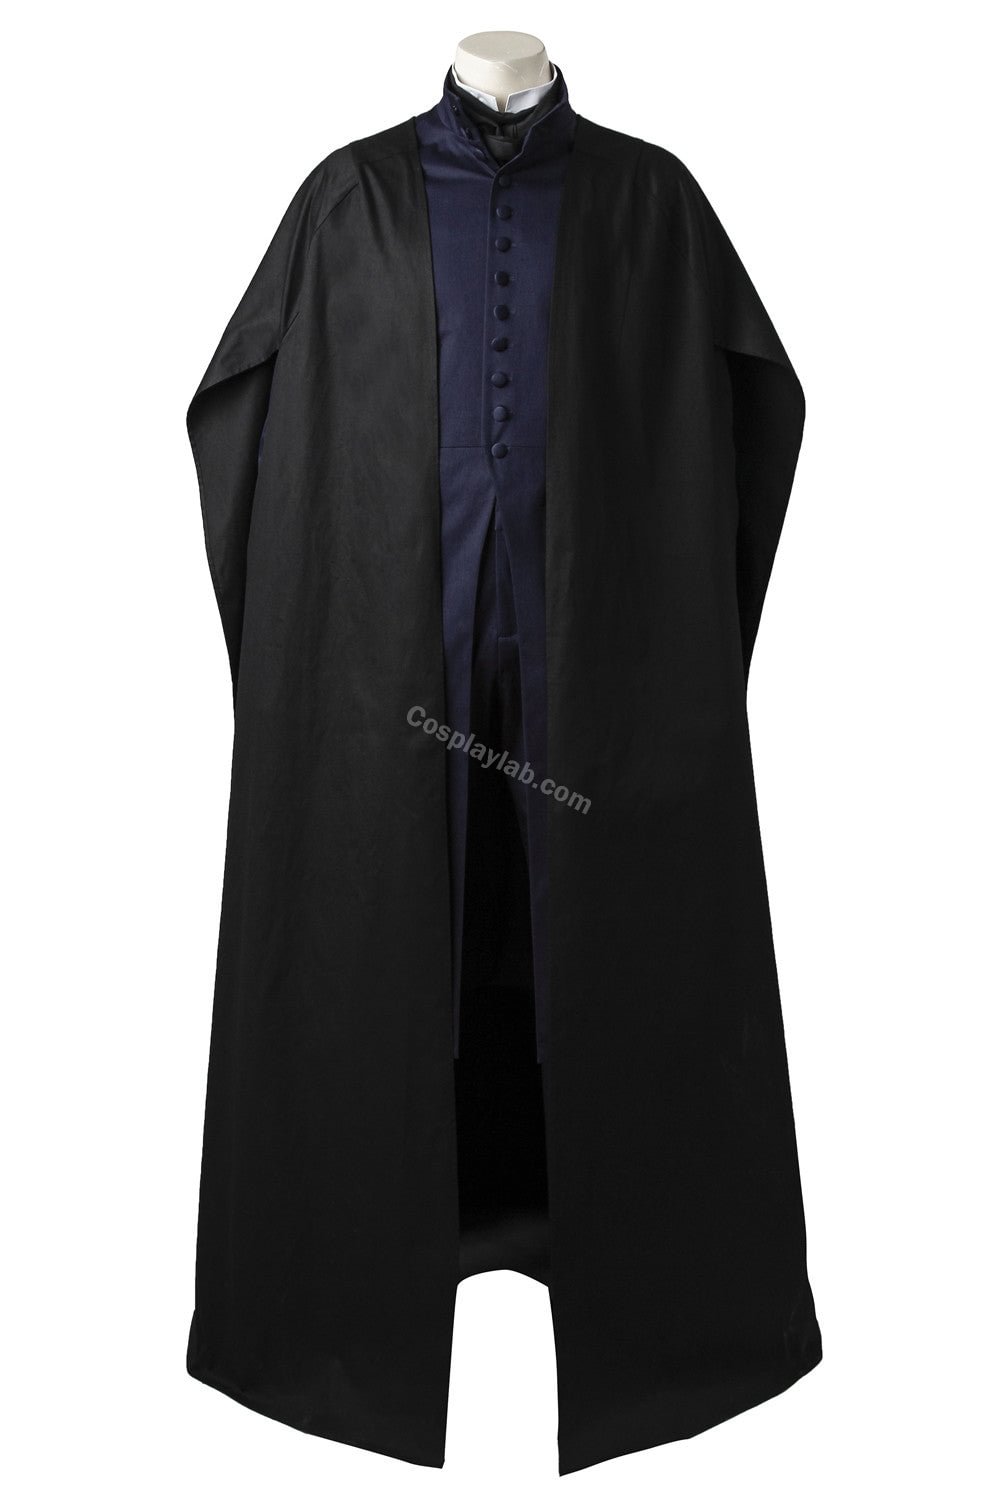 Severus Snape Cosplay Cloak Costume Harry Potter cosplay Costume